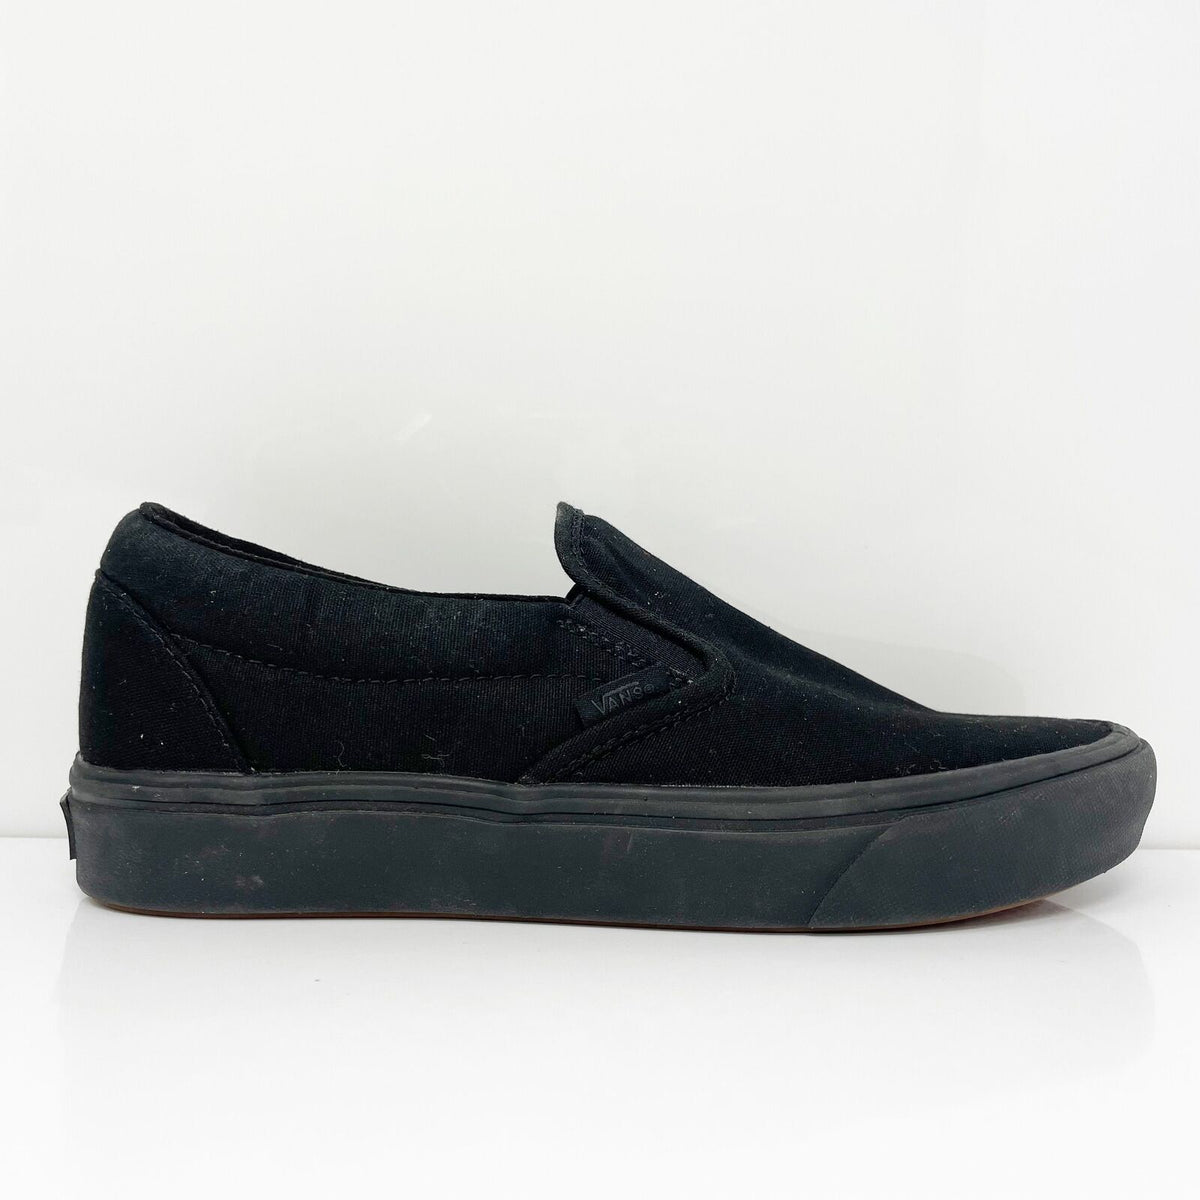 Vans Unisex Classic 500264 Black Casual Shoes Sneakers Size M 7.5 W 9 ...